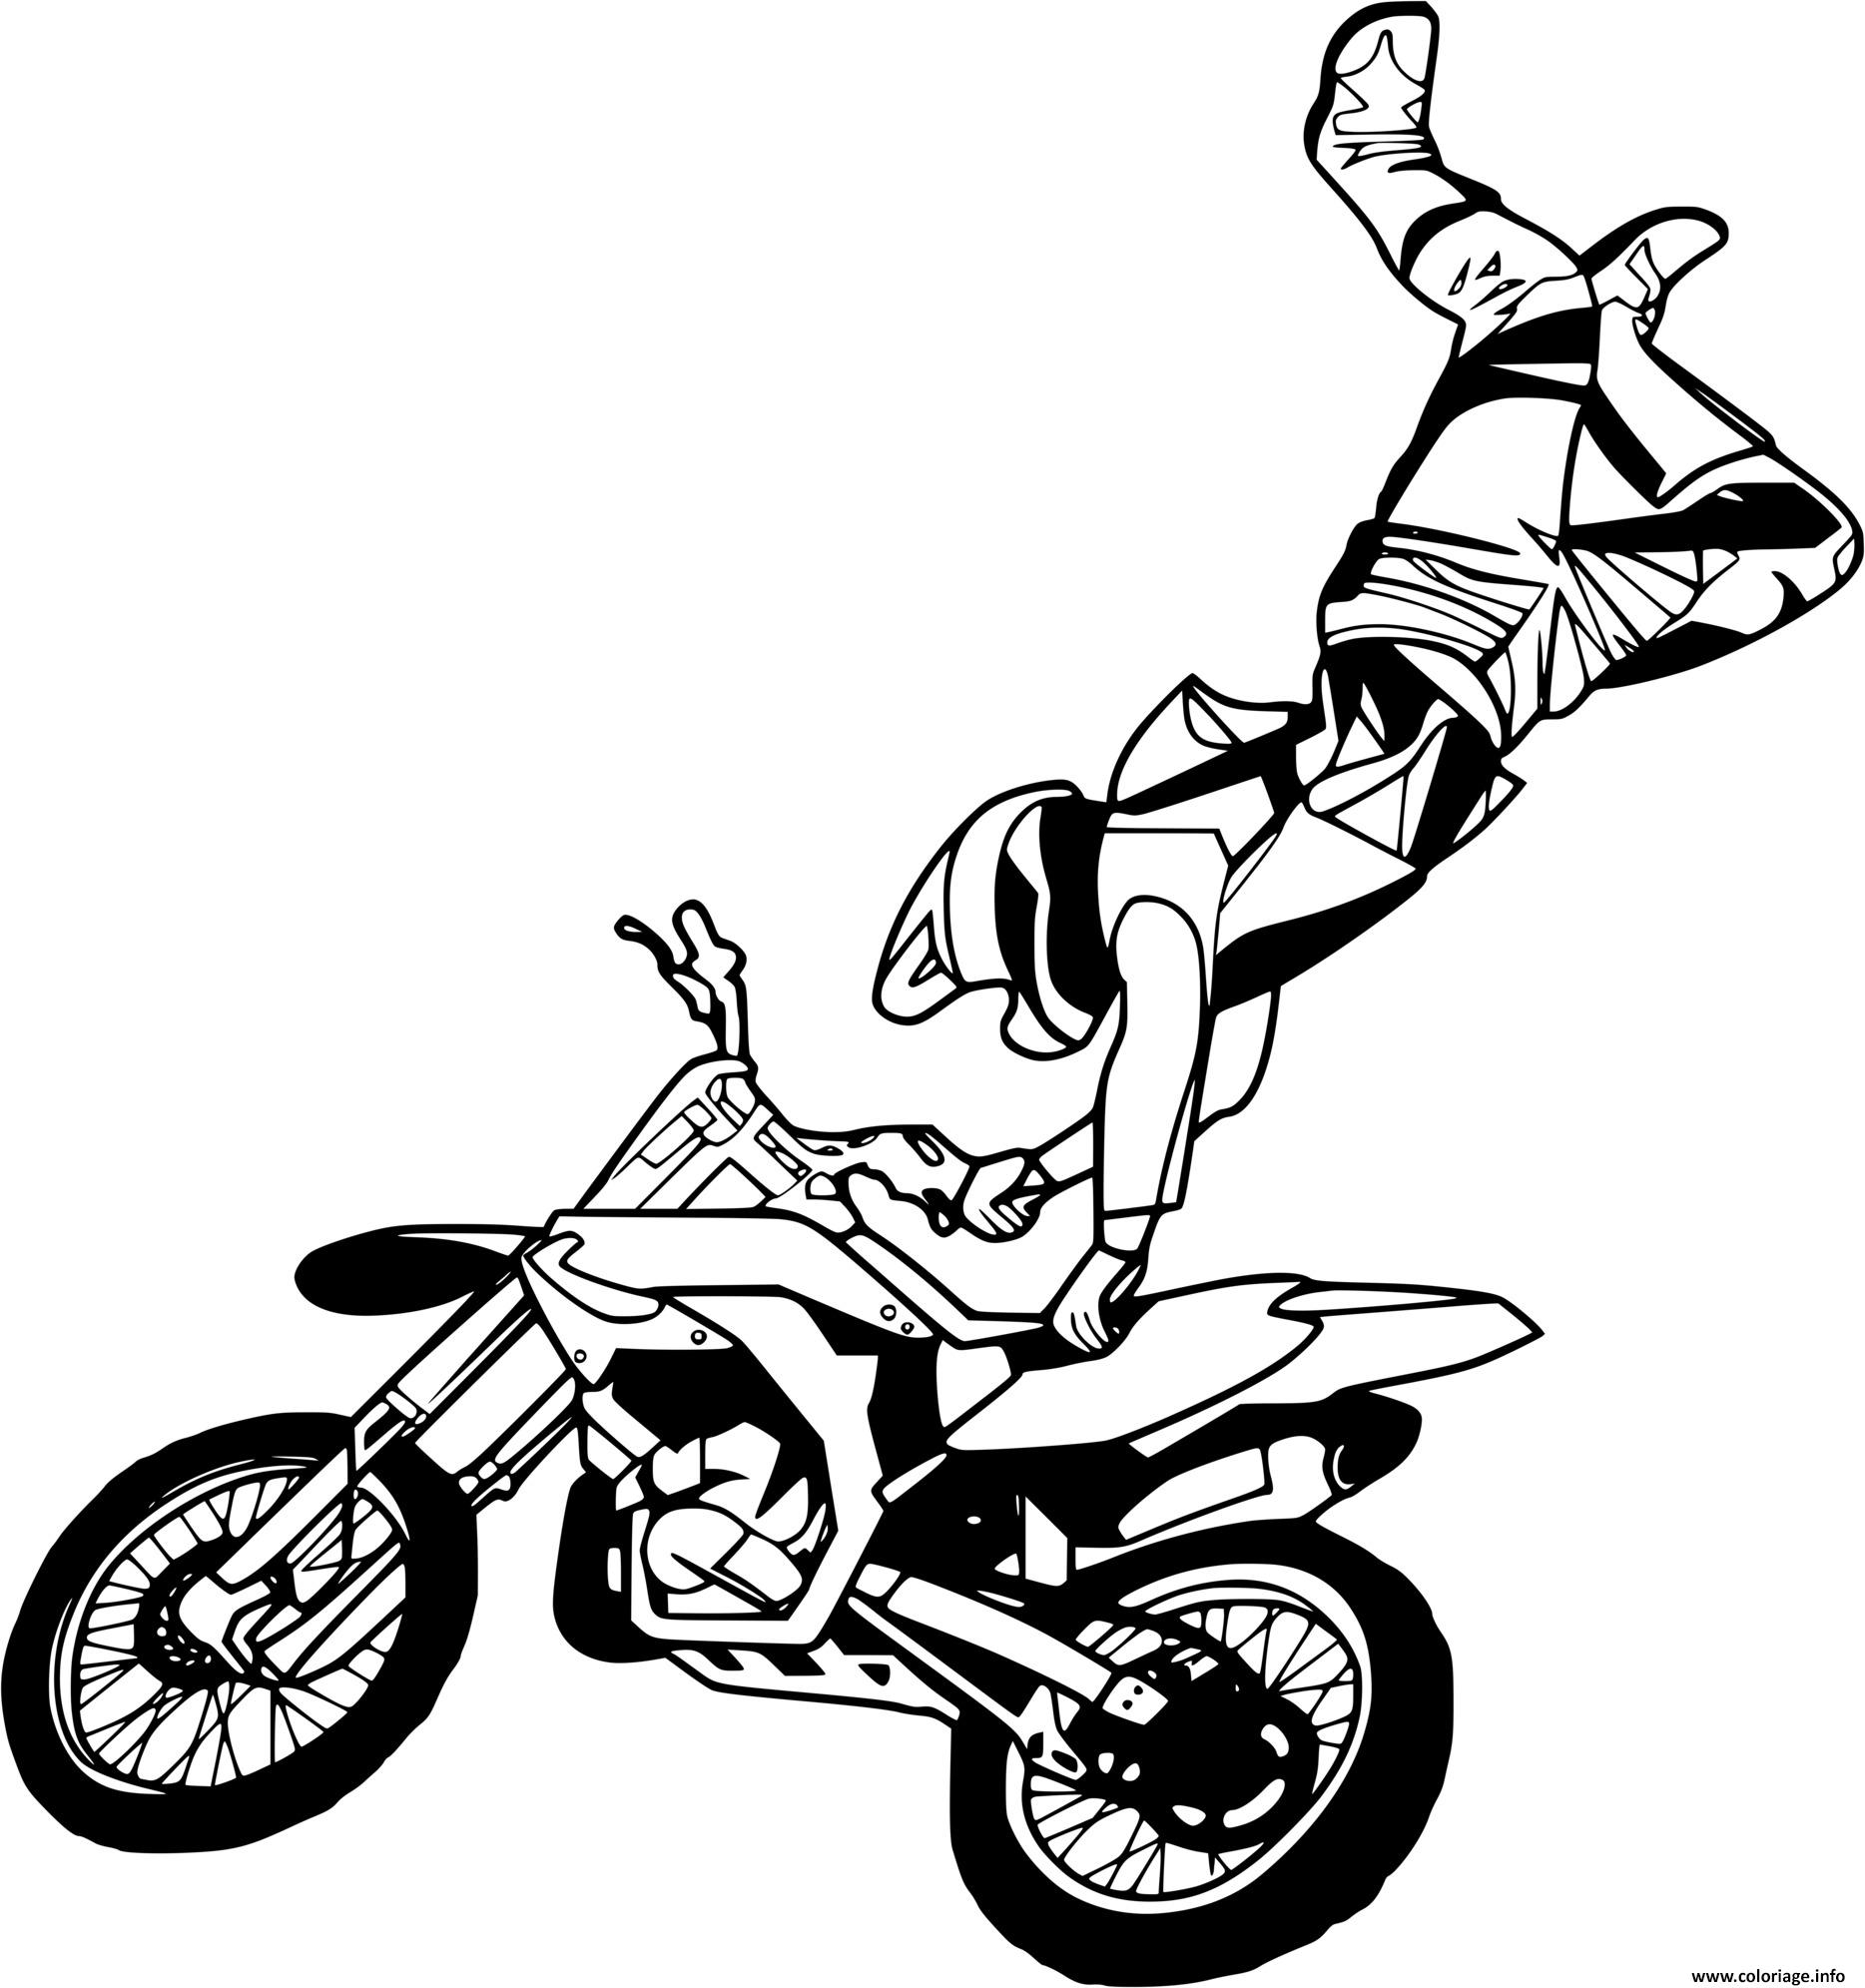 Dessin saut backflip motocross Coloriage Gratuit à Imprimer